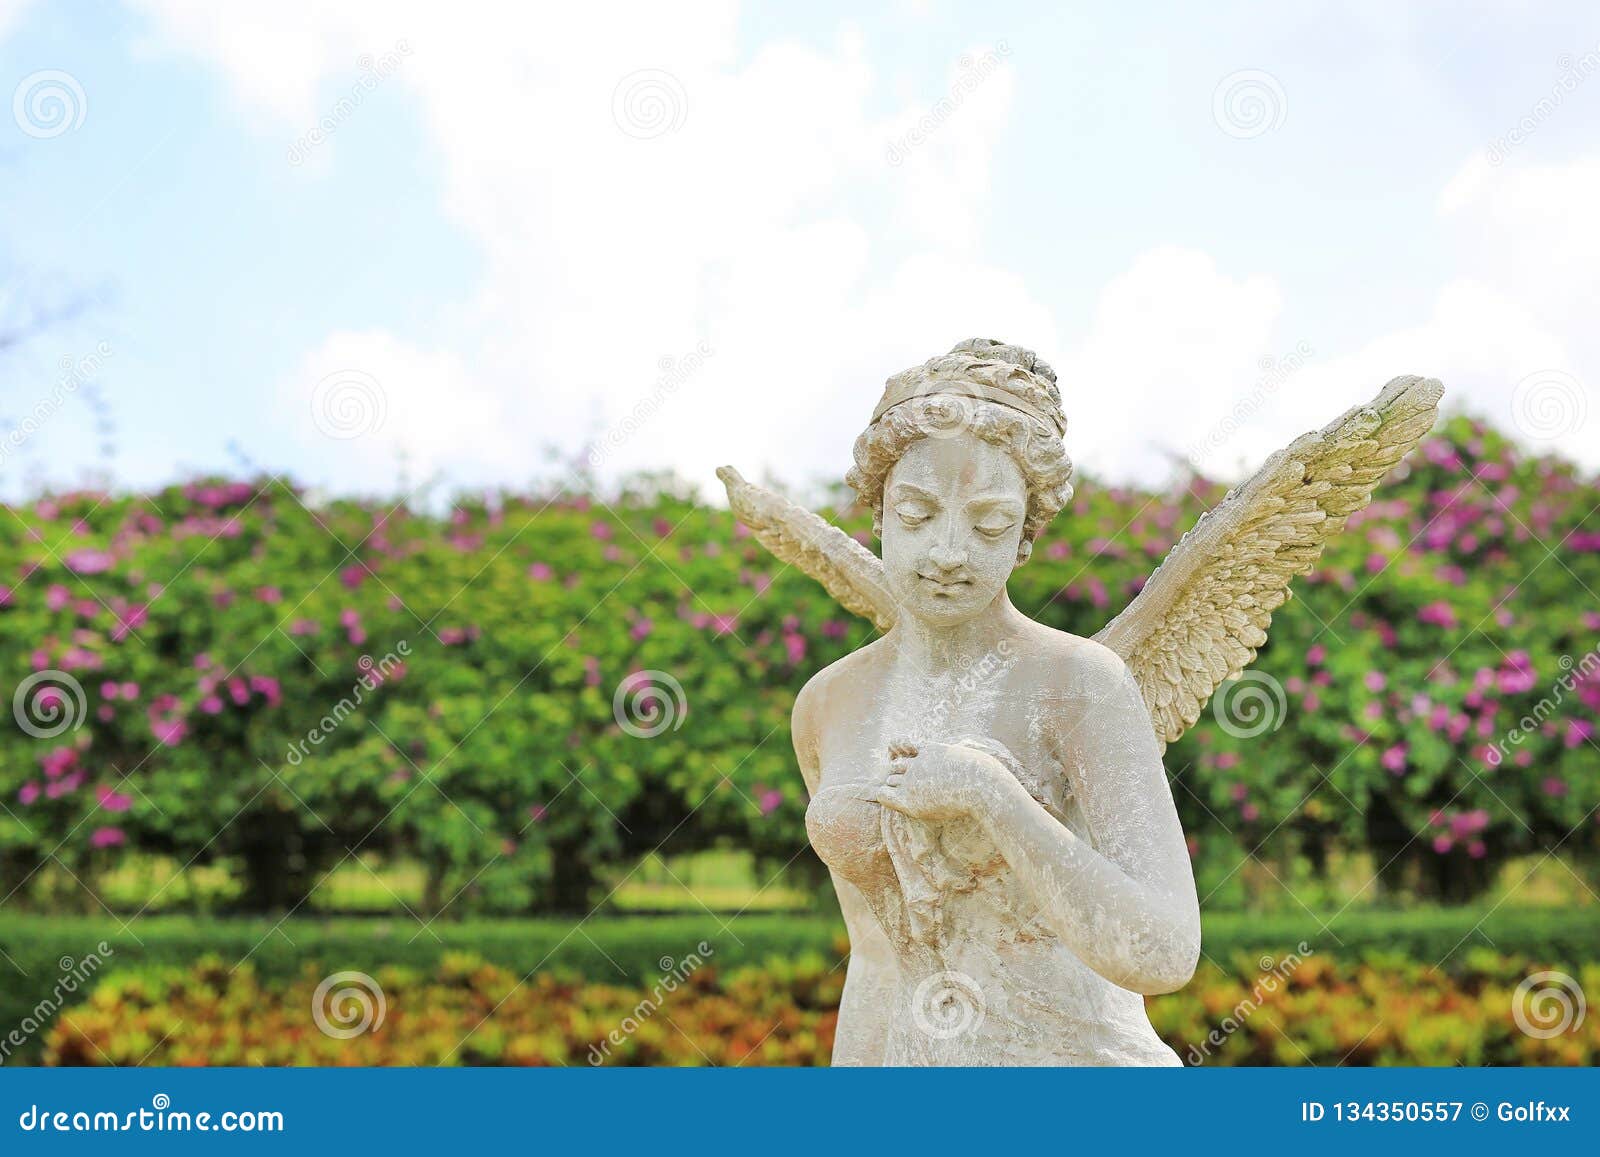 angel garden beautiful statue